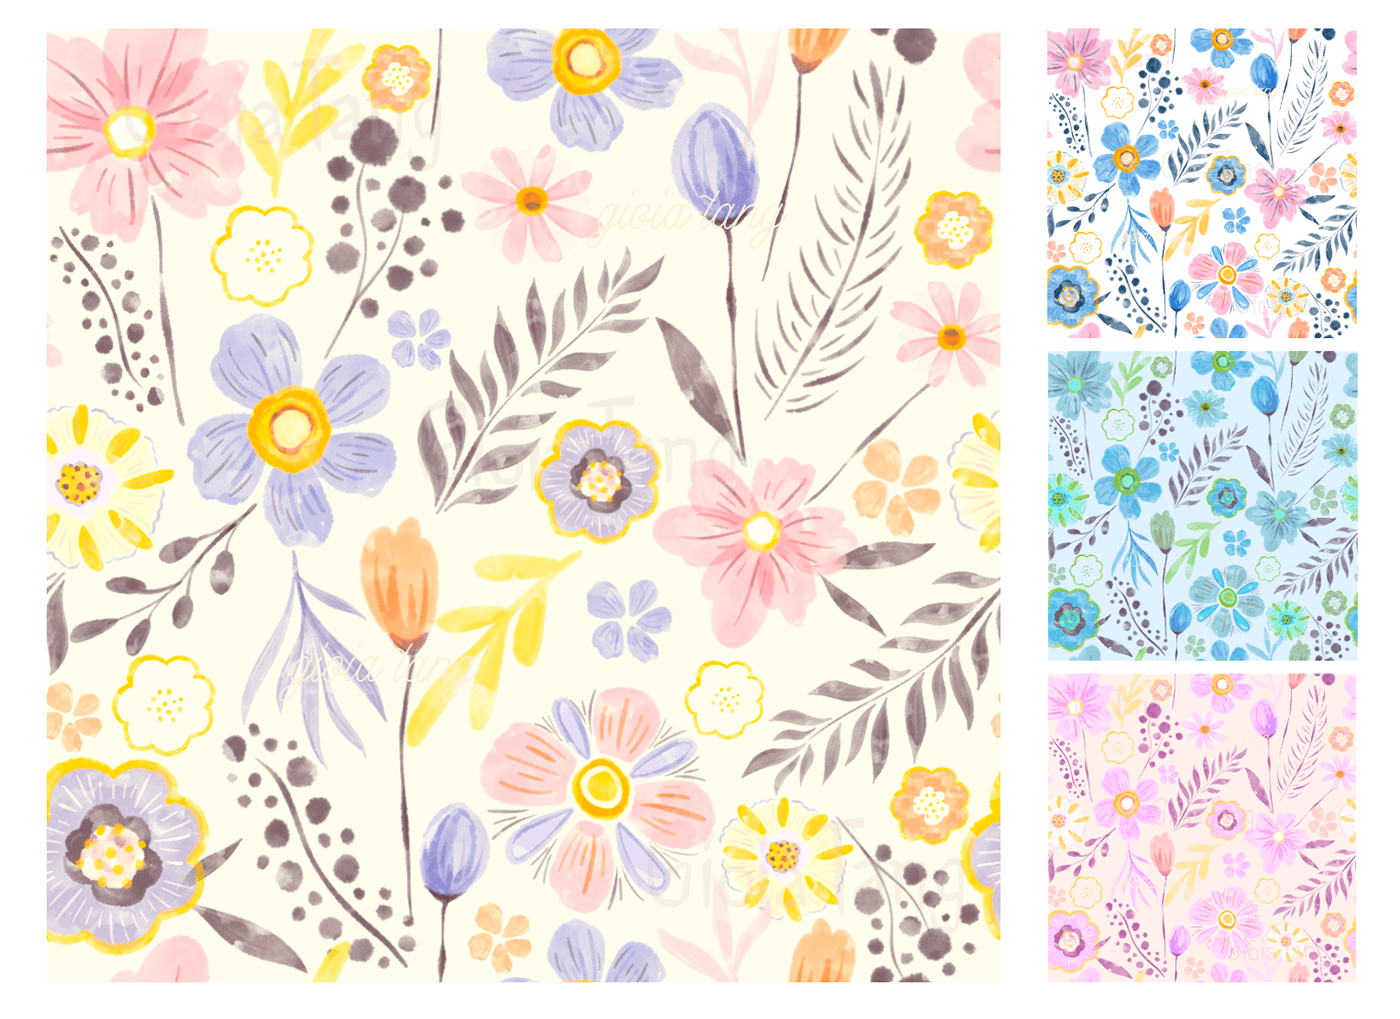 patterndesign ILLUSTRATION  Flowers floral watercolor artist pattern textile surface design print